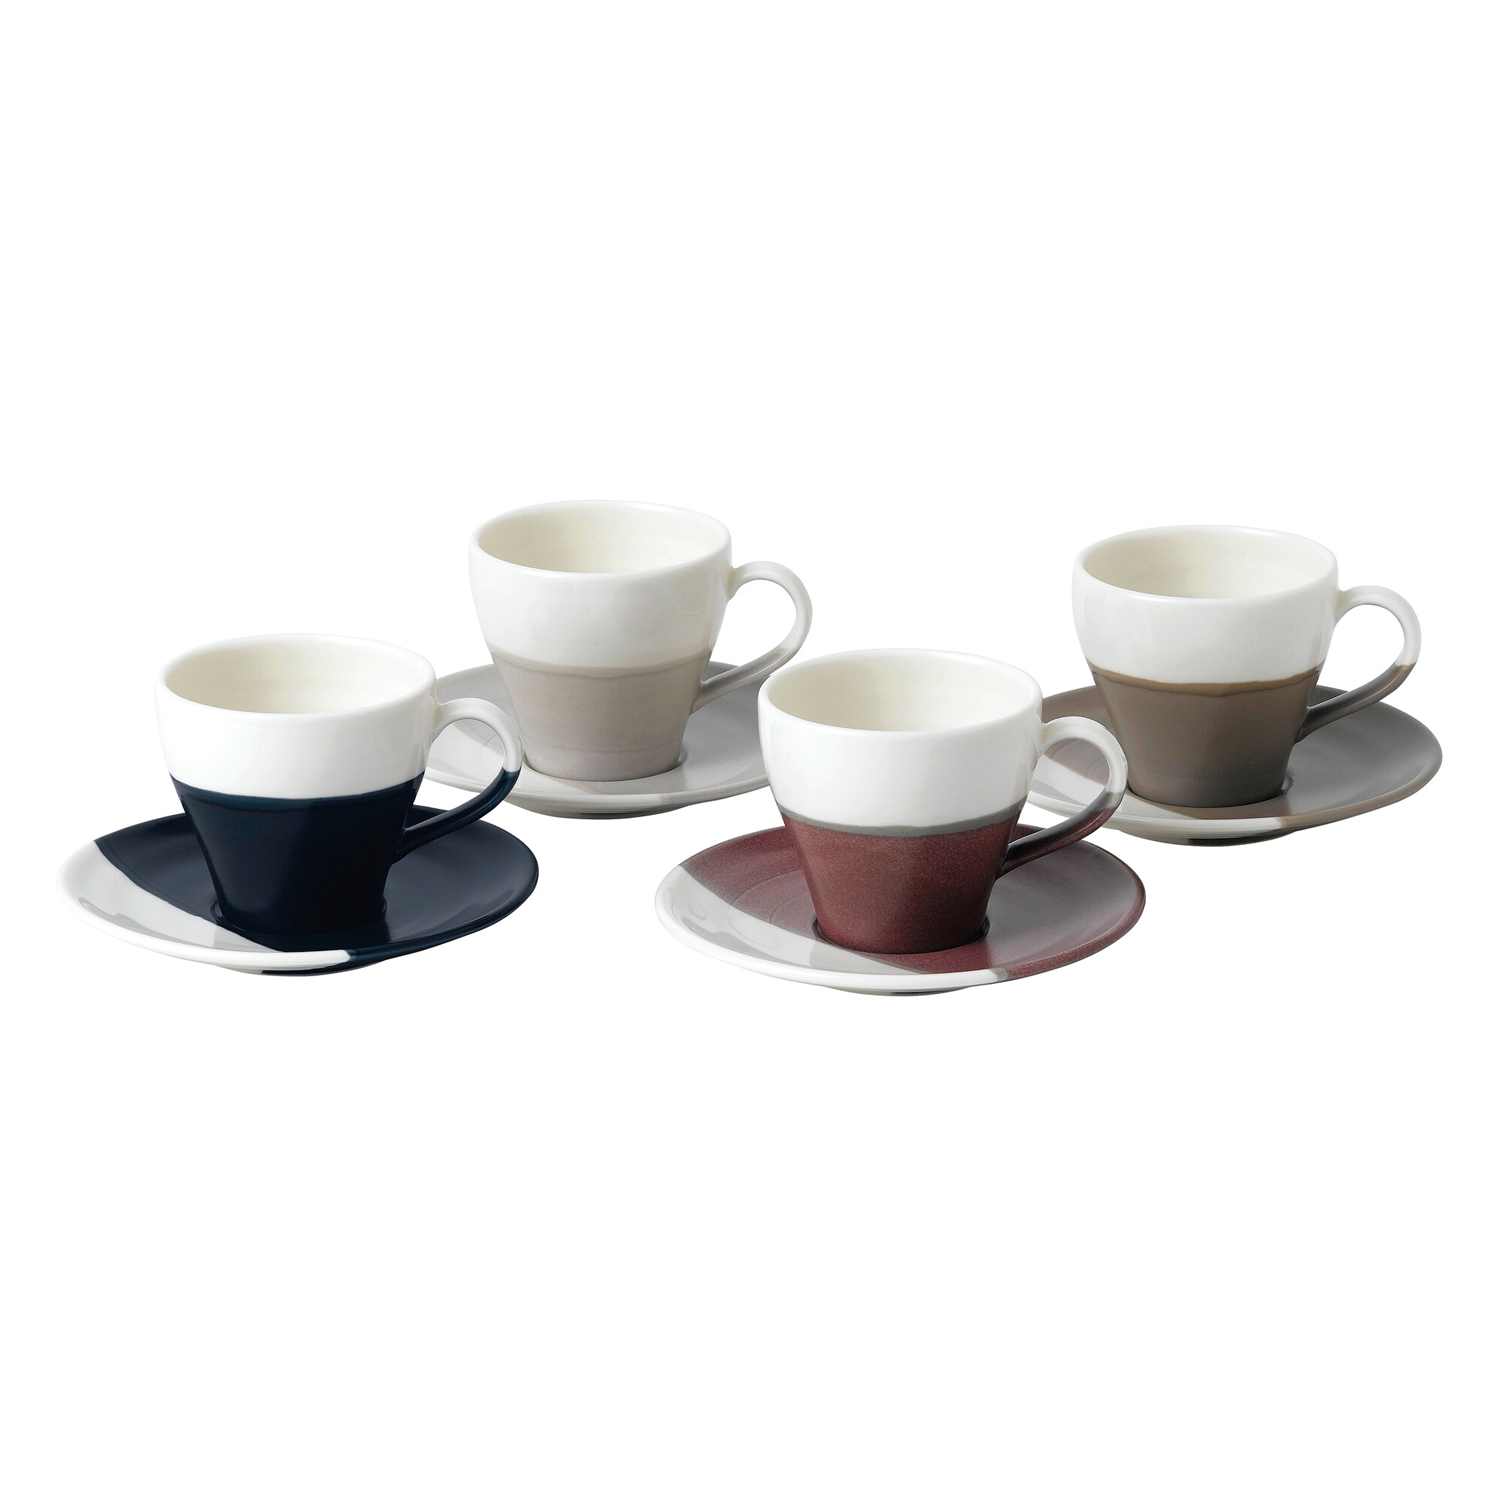 Coffee Academy Espresso Cups- Set of 4